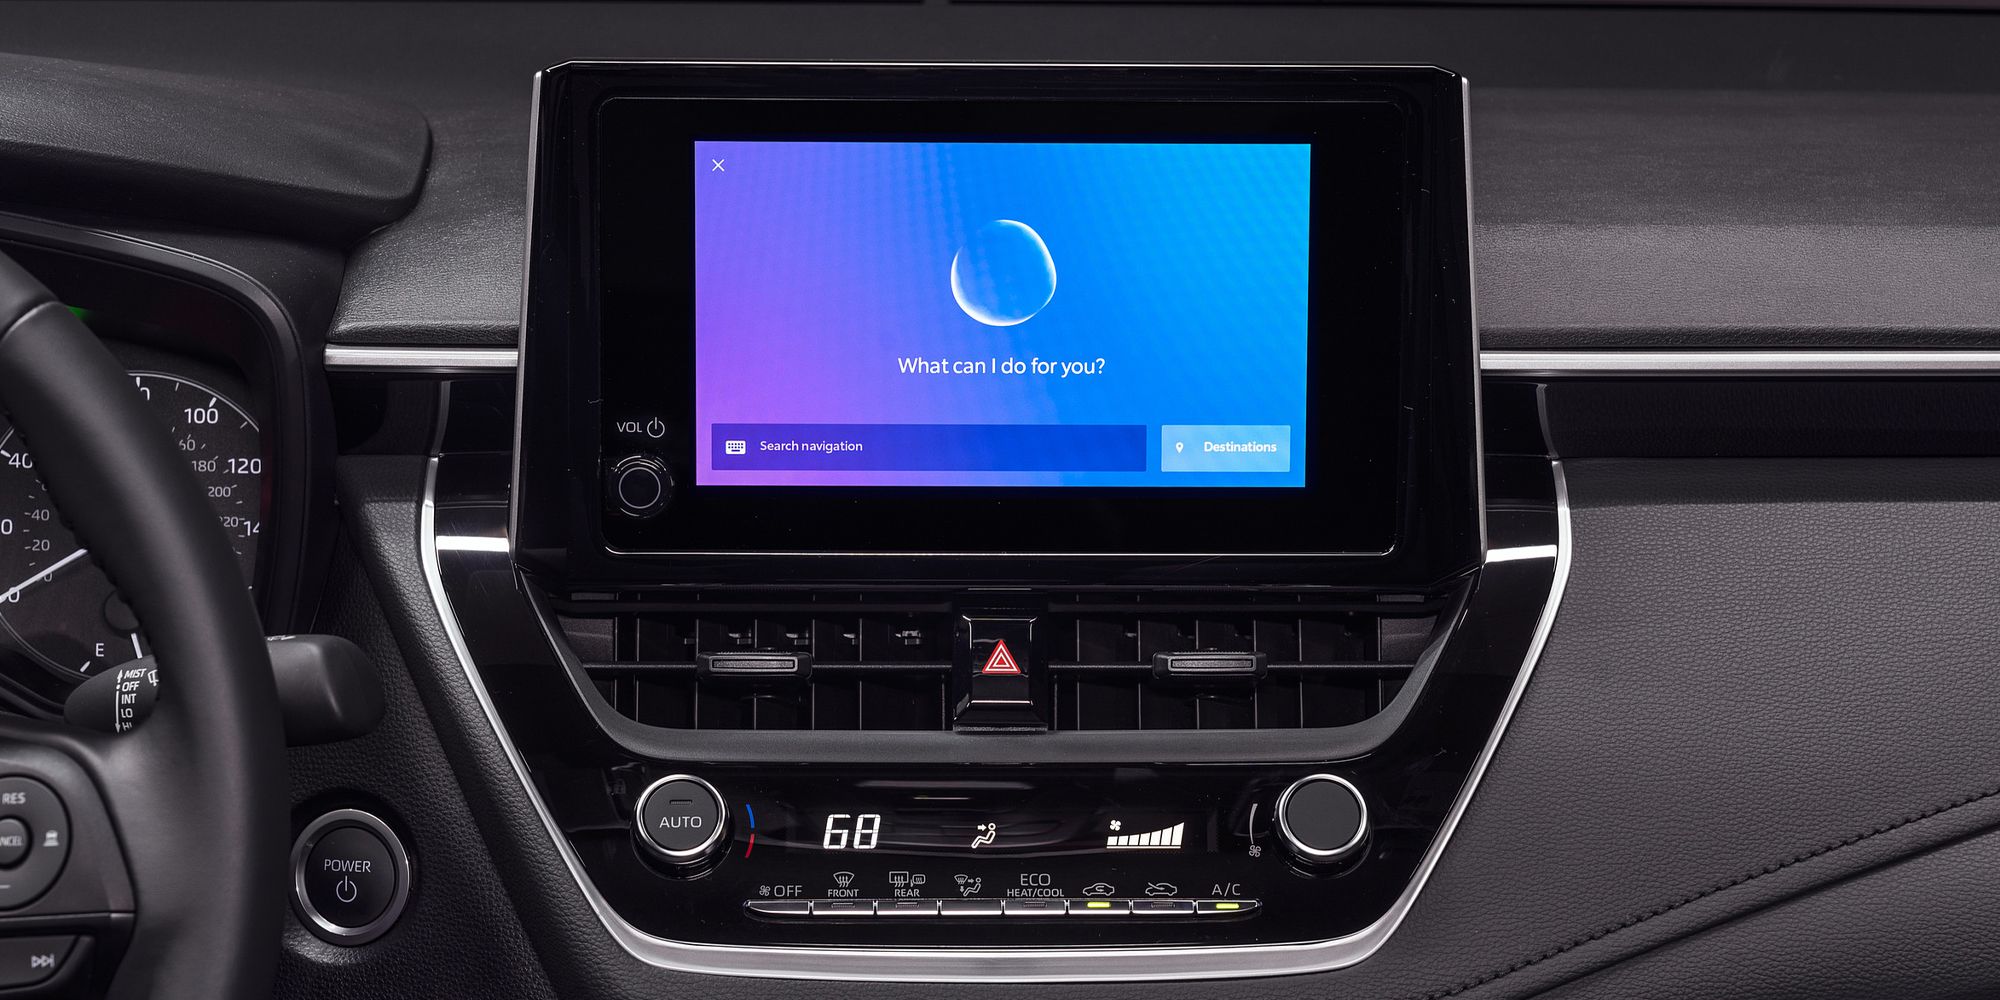 Toyota Corolla Hybrid interior infotainment screen